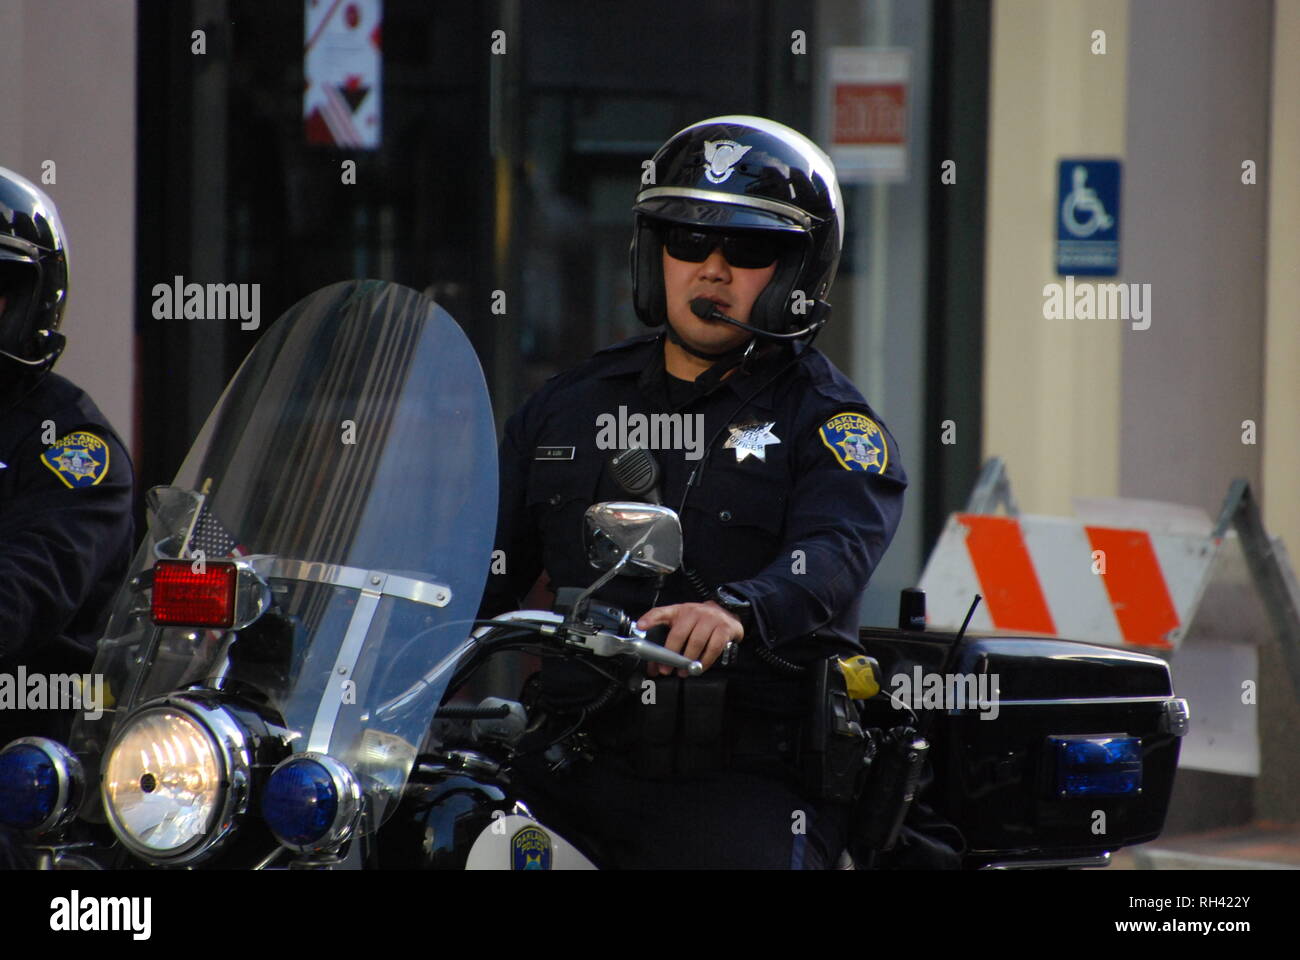 Oakland police Officer Alwin Luu patrols on motorcycle outside a Kamala Harris for President rally in downtown Oakland on Jan. 27, 2019. Stock Photo